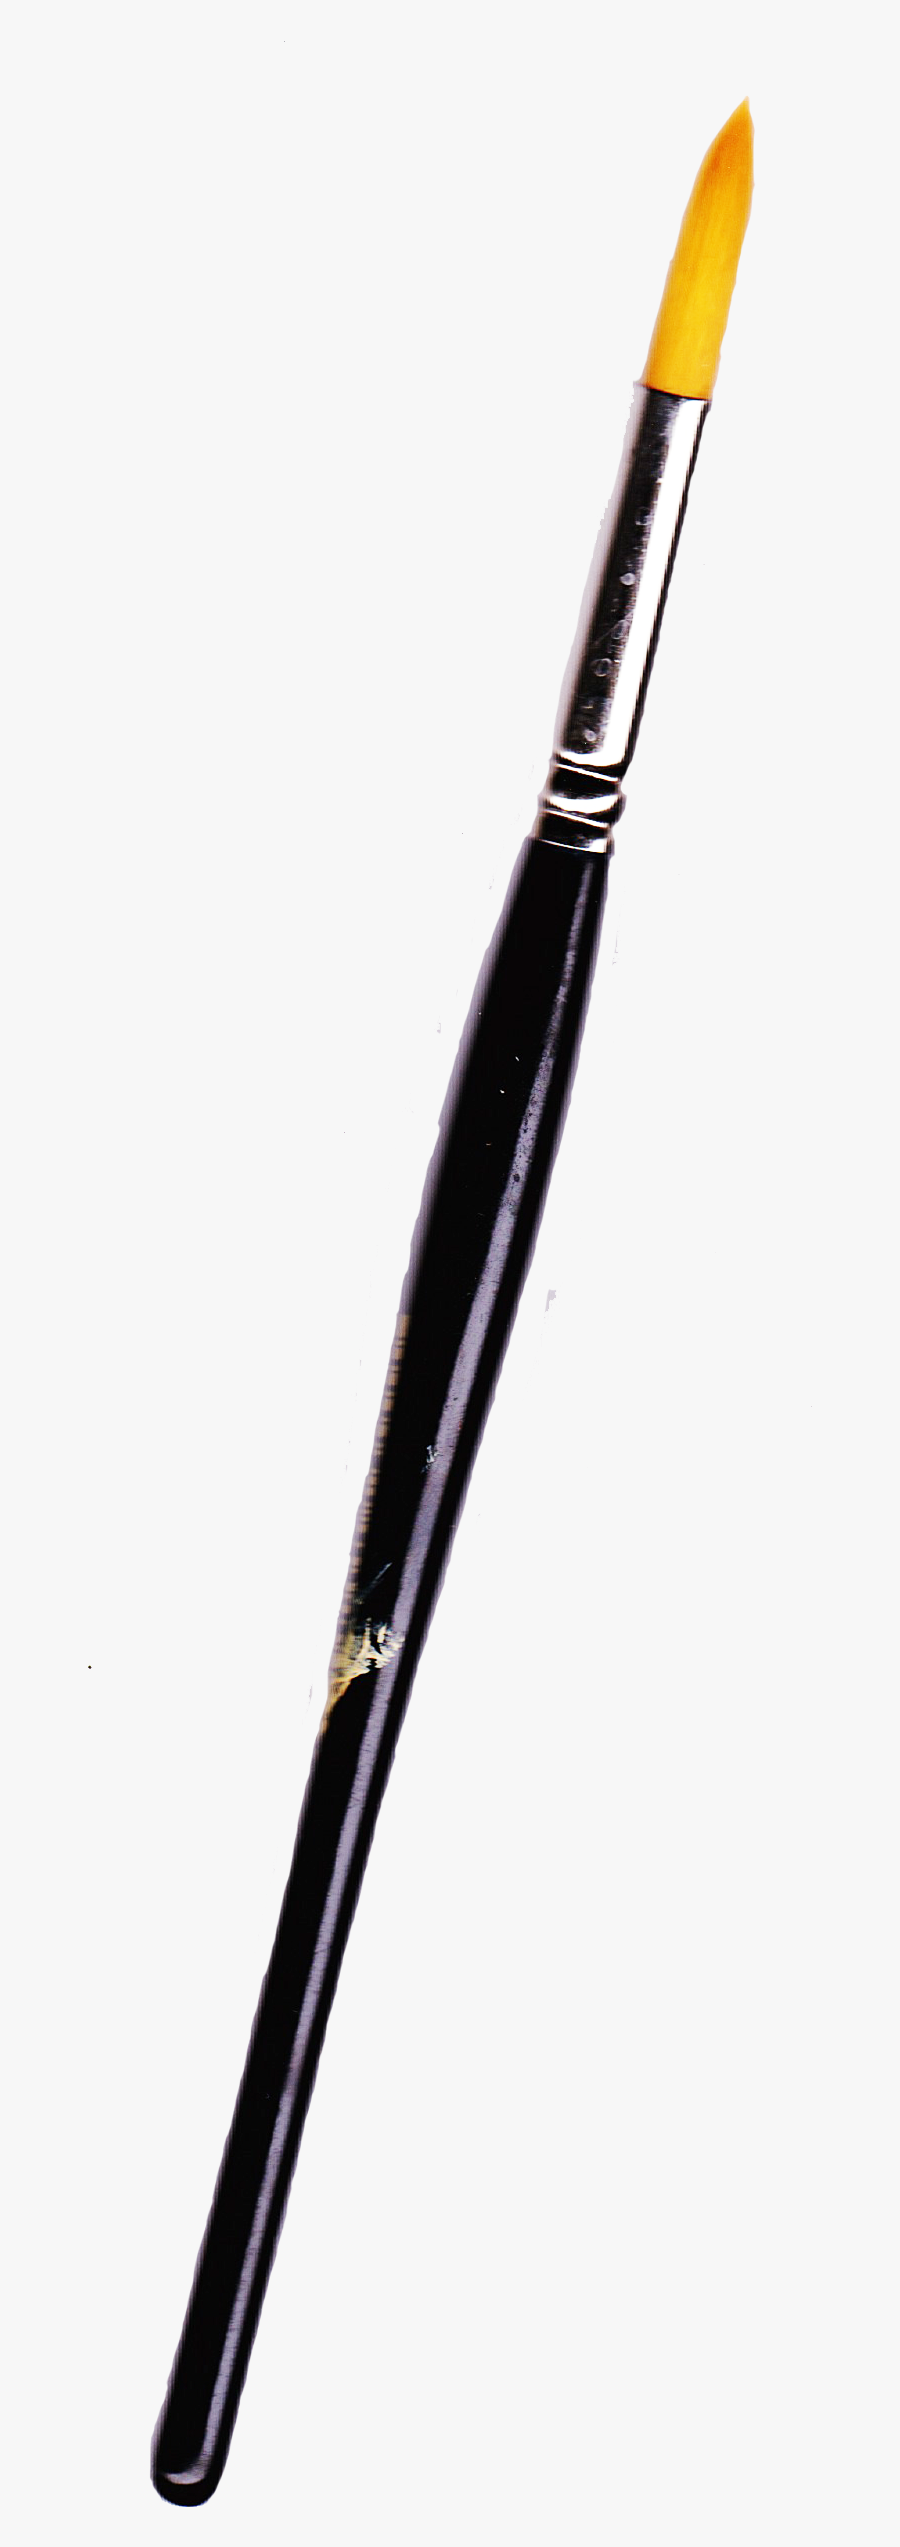 Black Paint Brush Stroke - Parker Pens With Name, Transparent Clipart